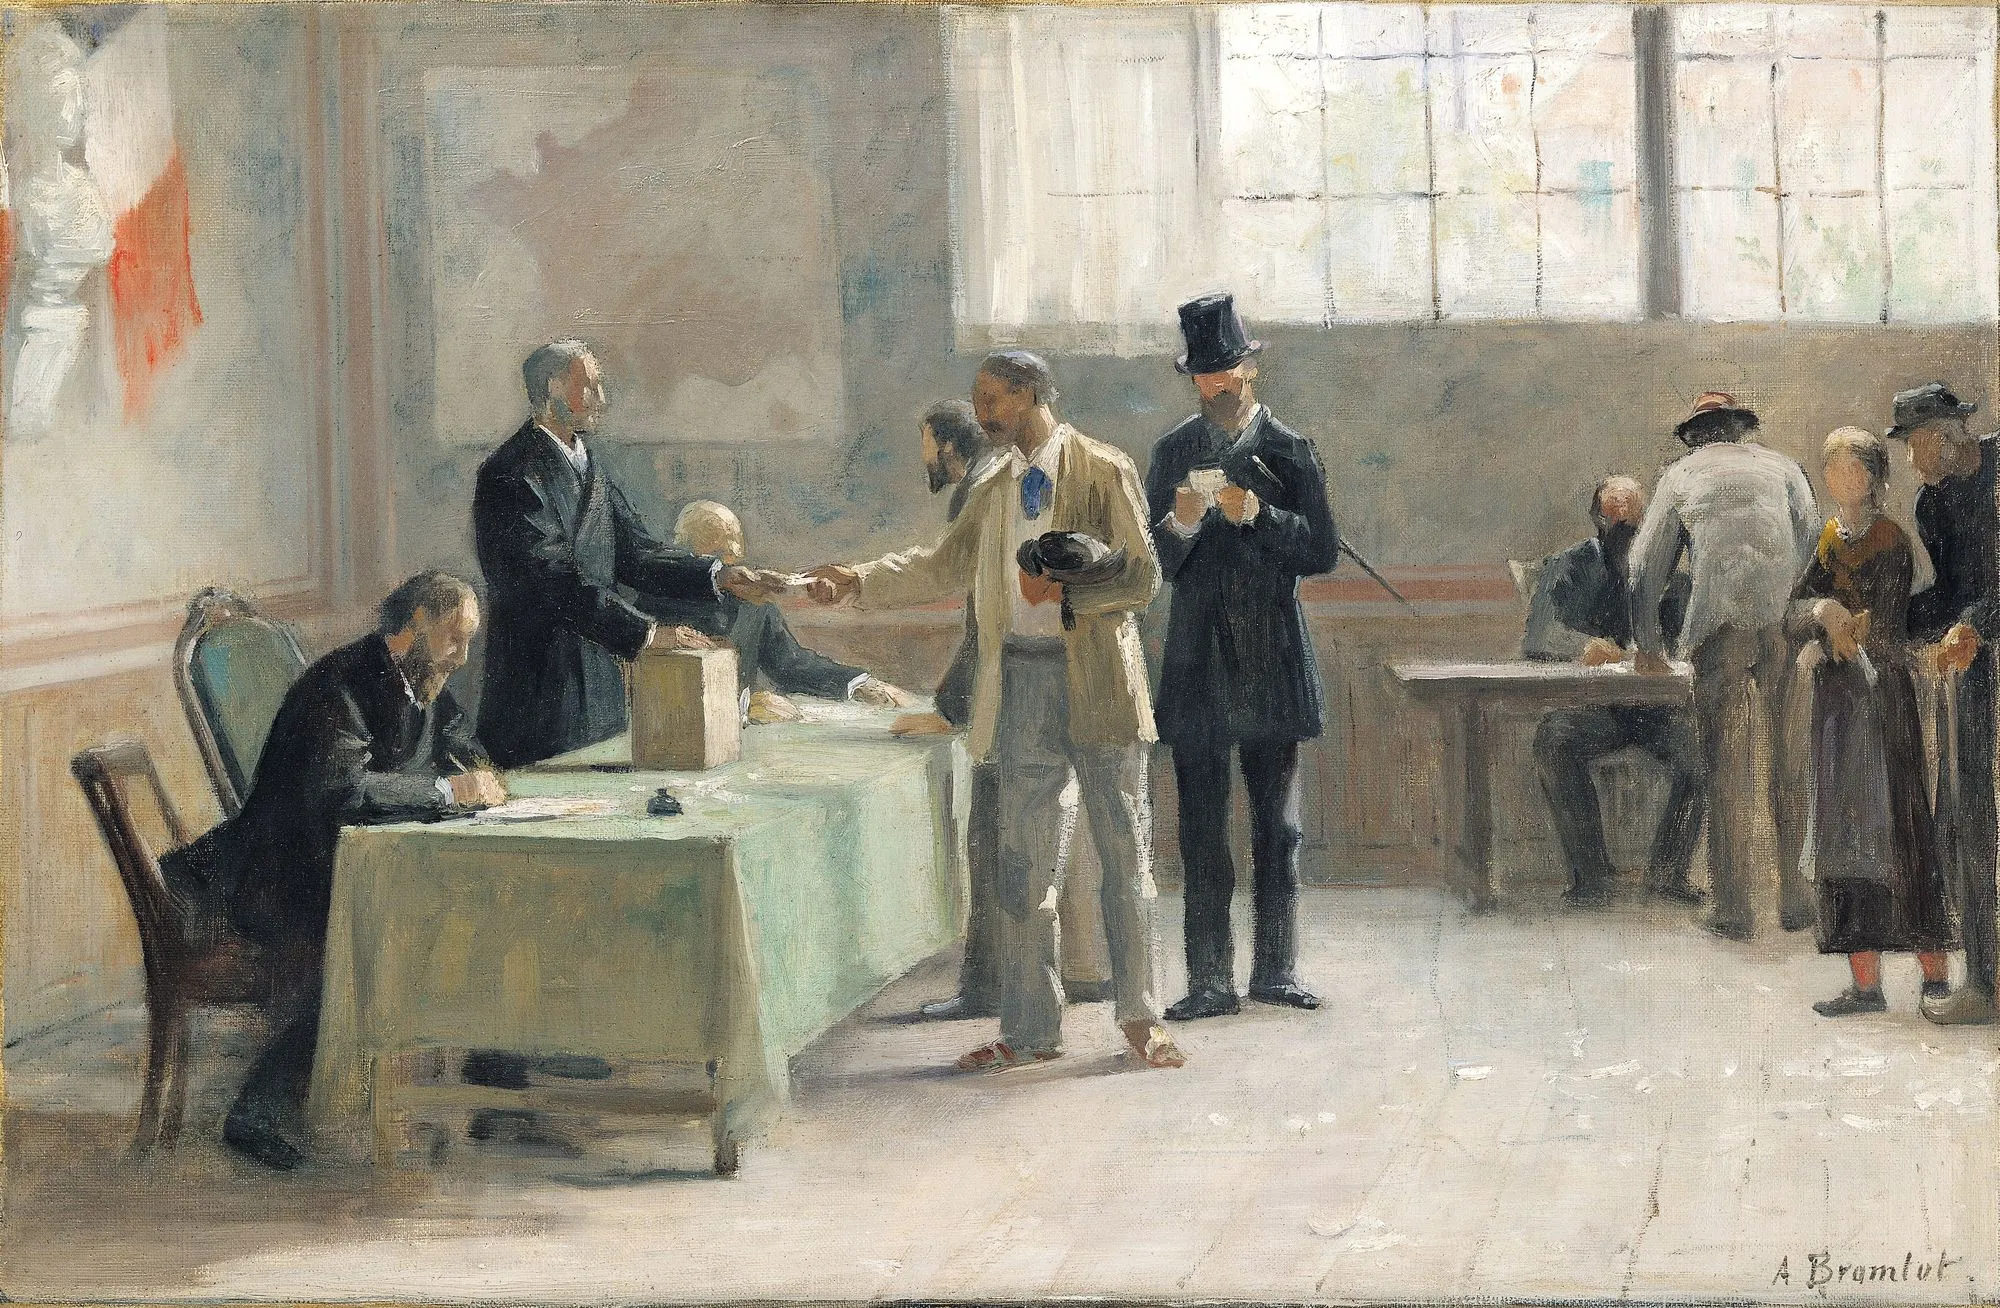 Alfred-Henri Bramtot, Le Suffrage universel, 1889.